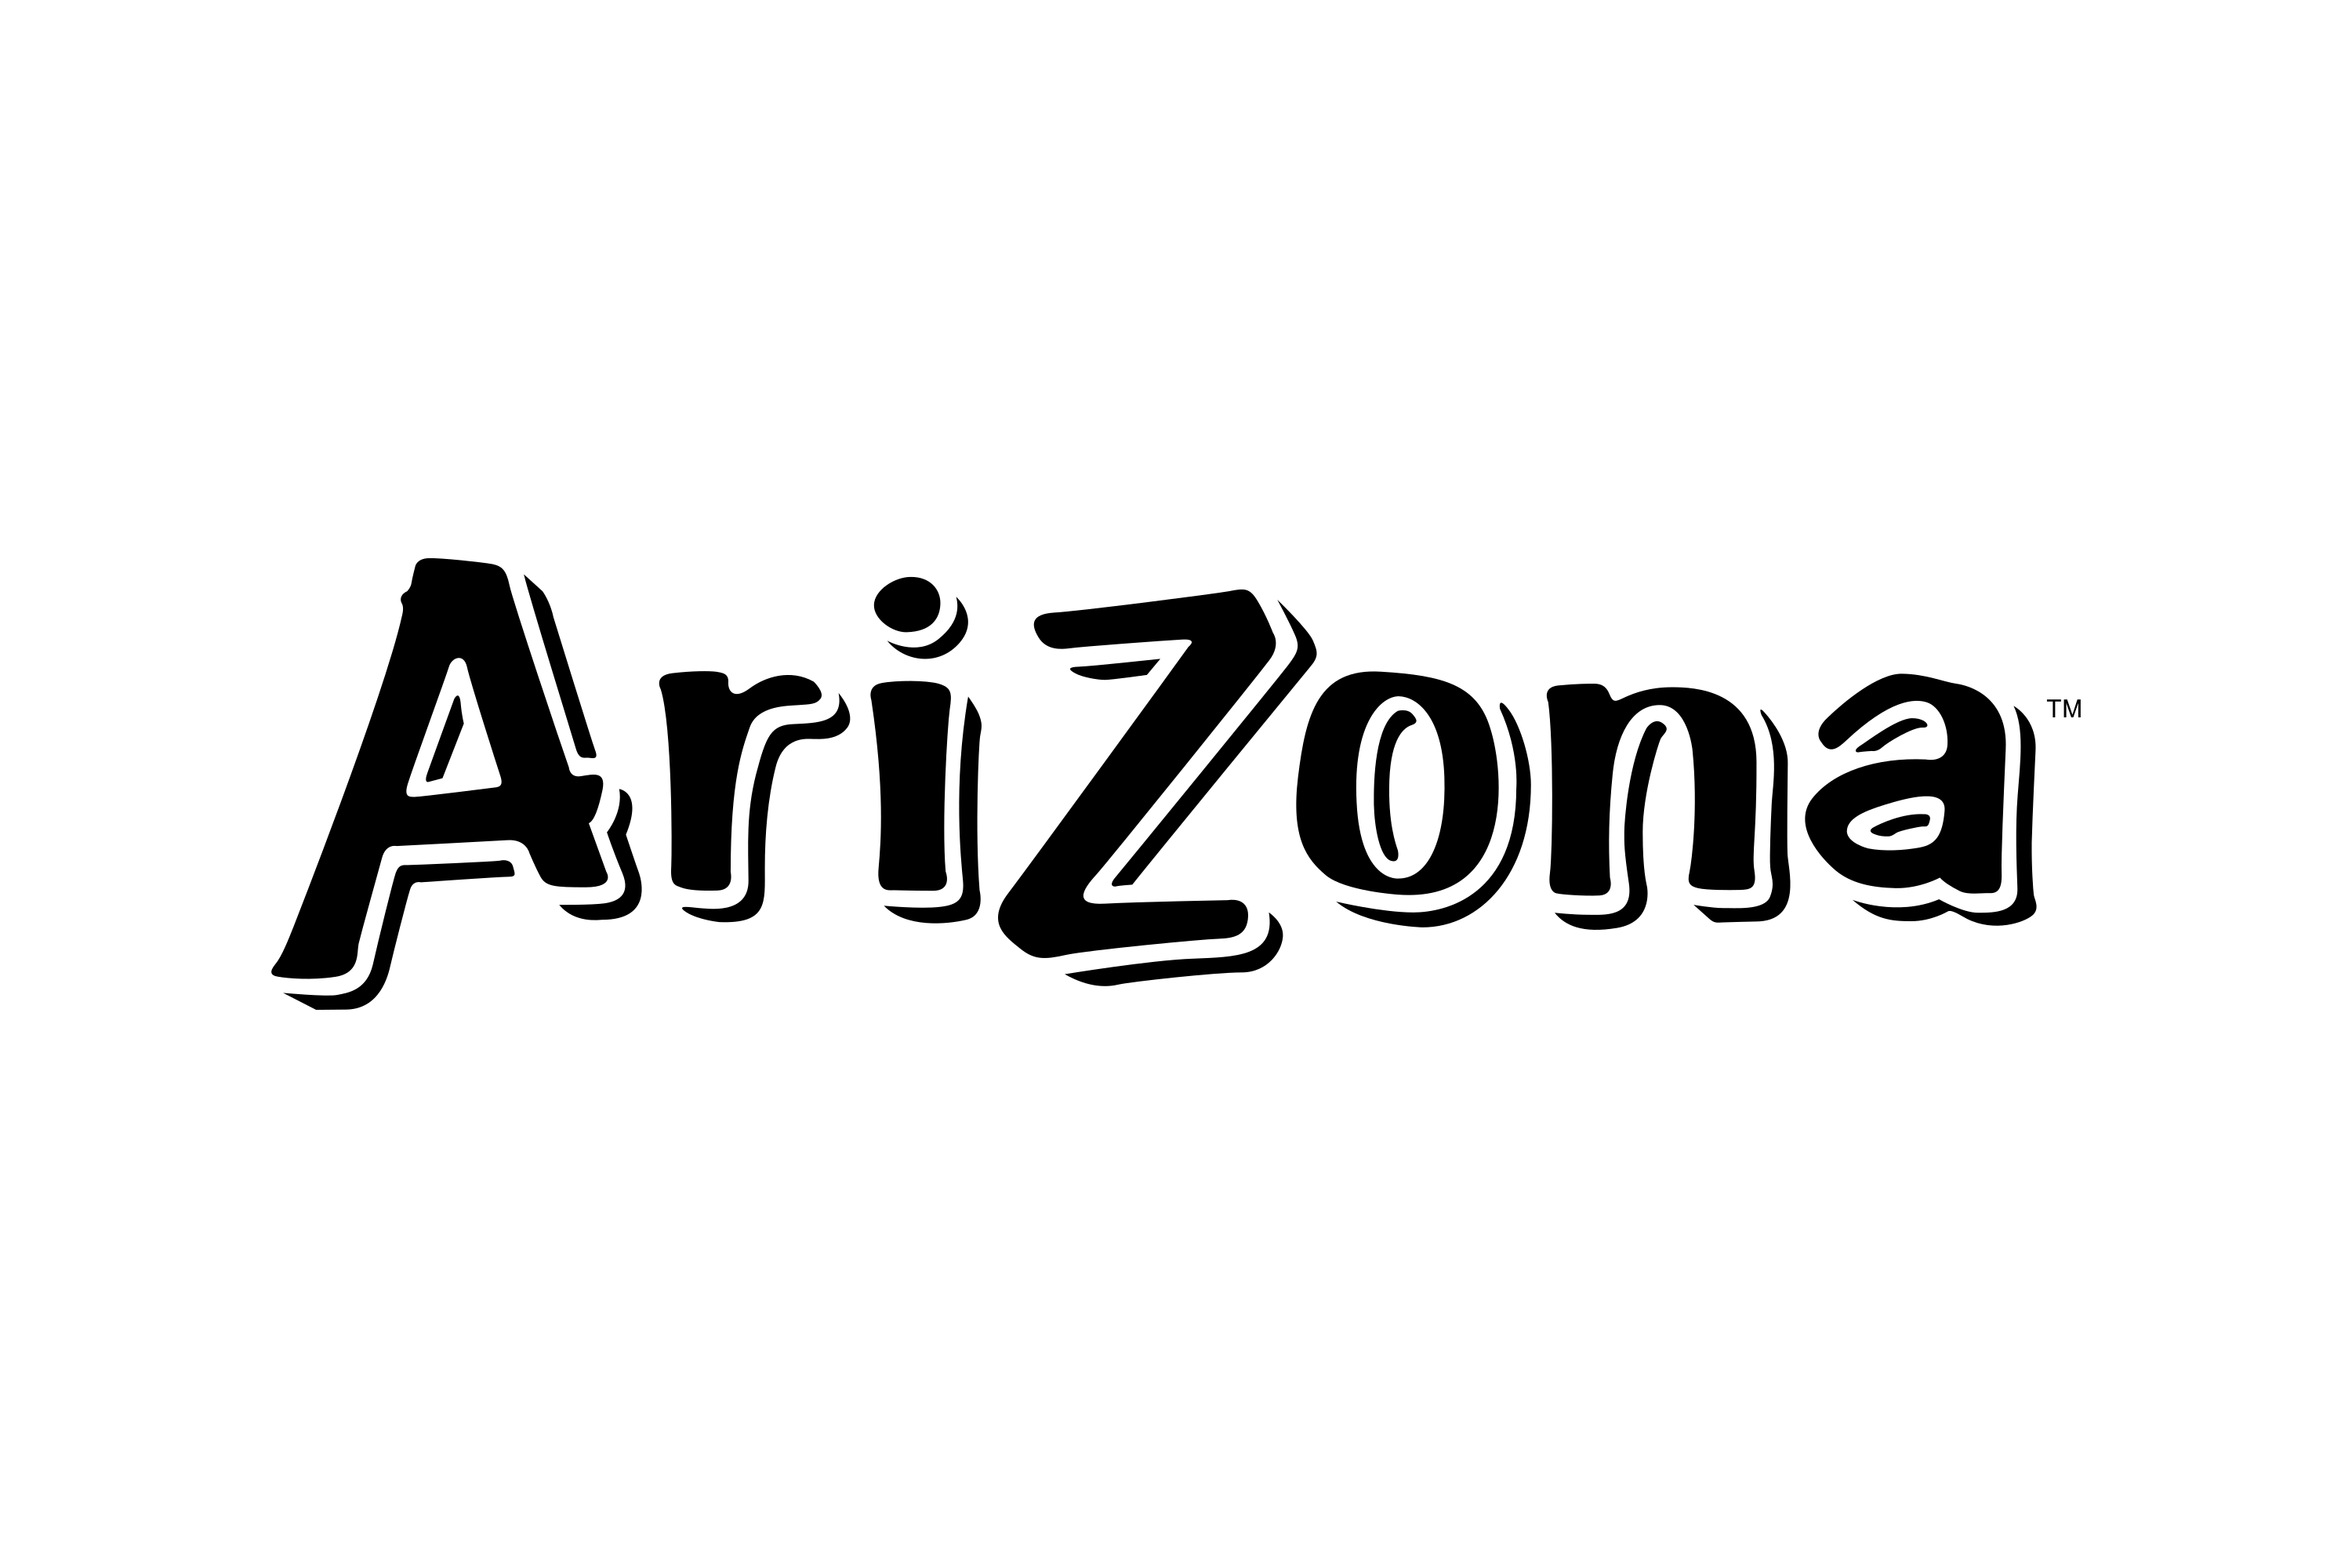 Arizona Beverage logo